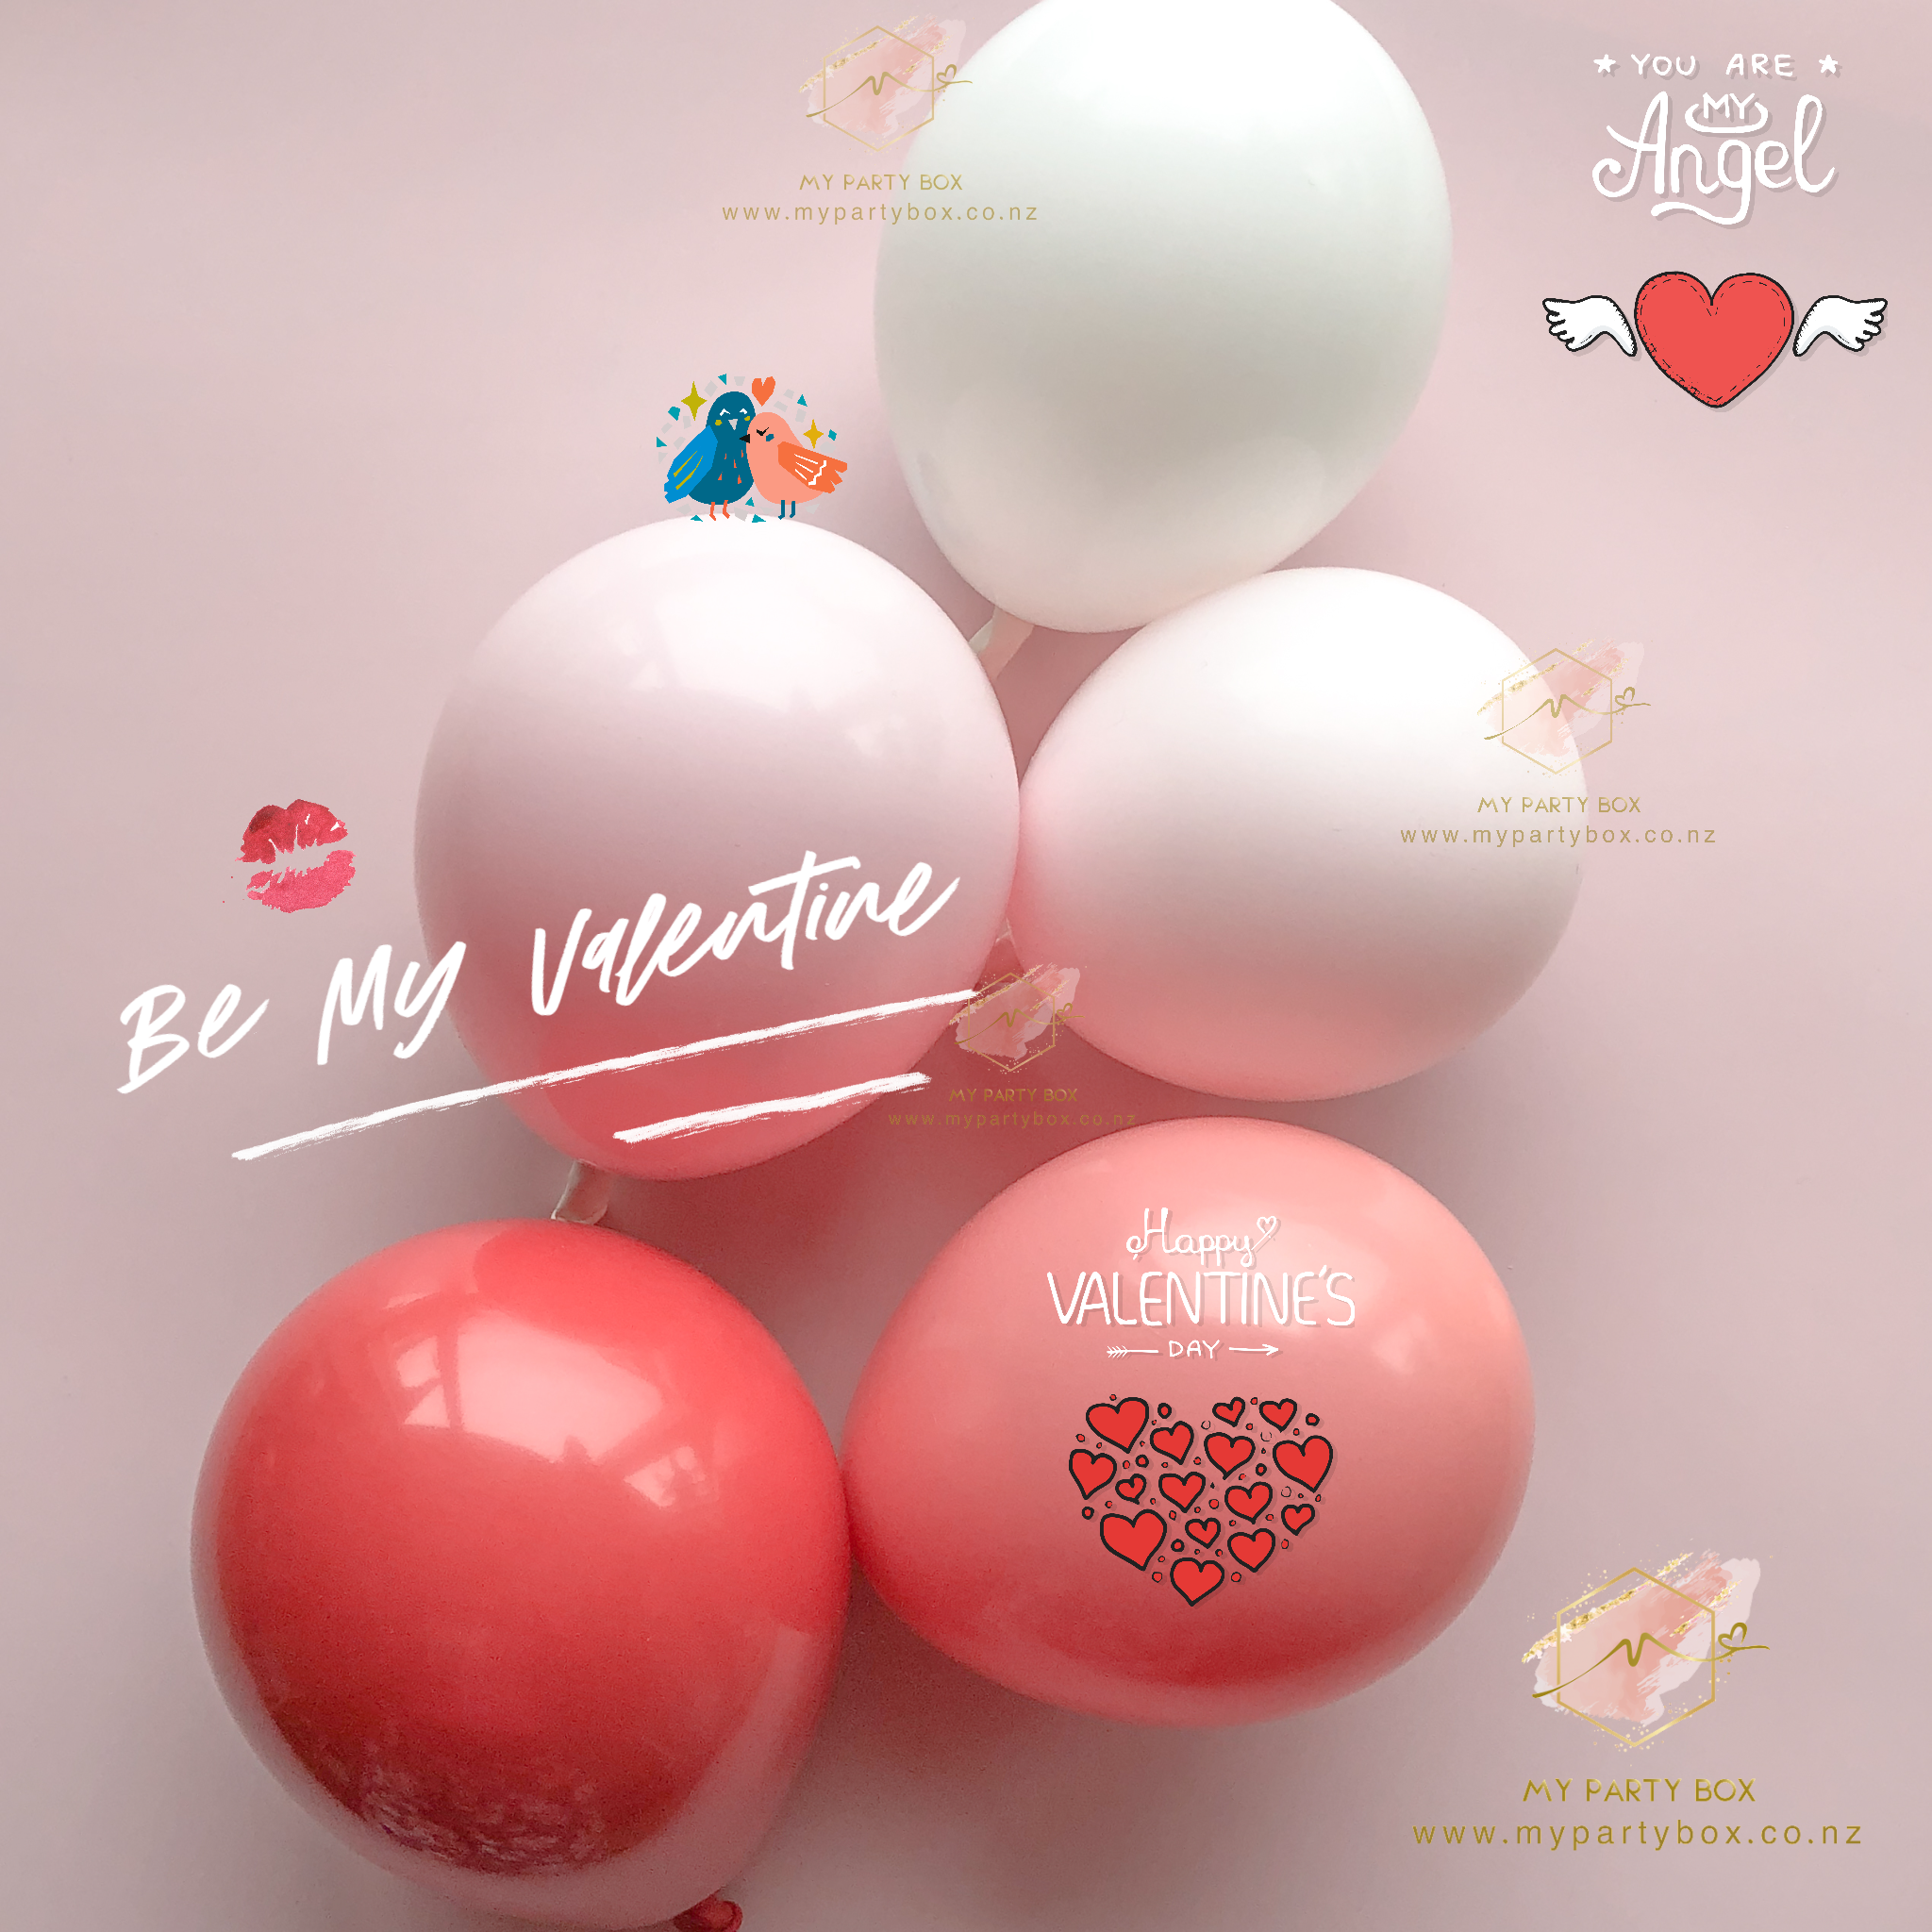 Be my valentine balloons